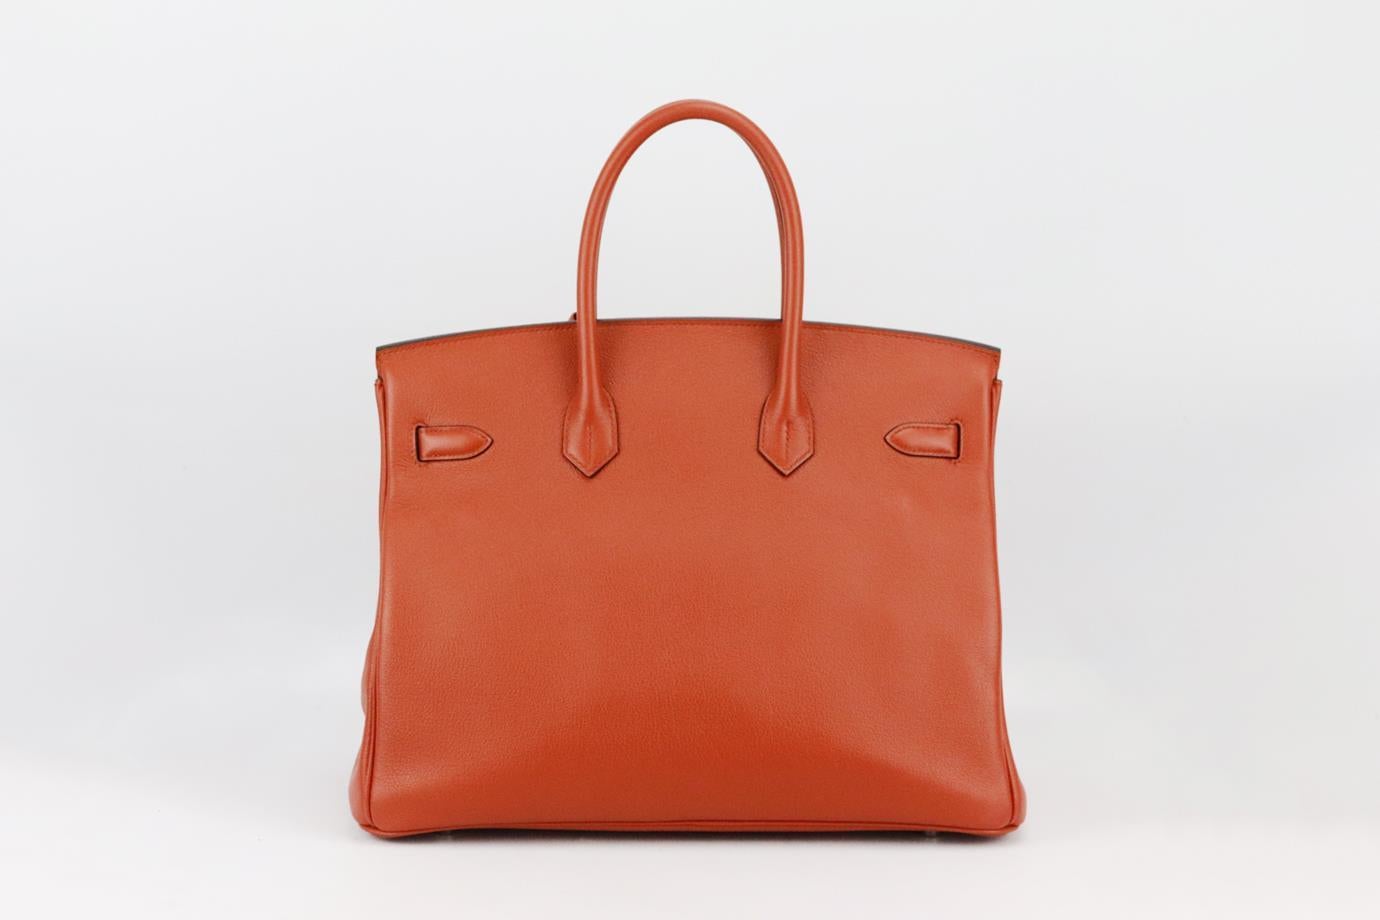 Hermès 2017 Birkin 35cm Taurillon Novillo Leather Bag In Excellent Condition For Sale In London, GB